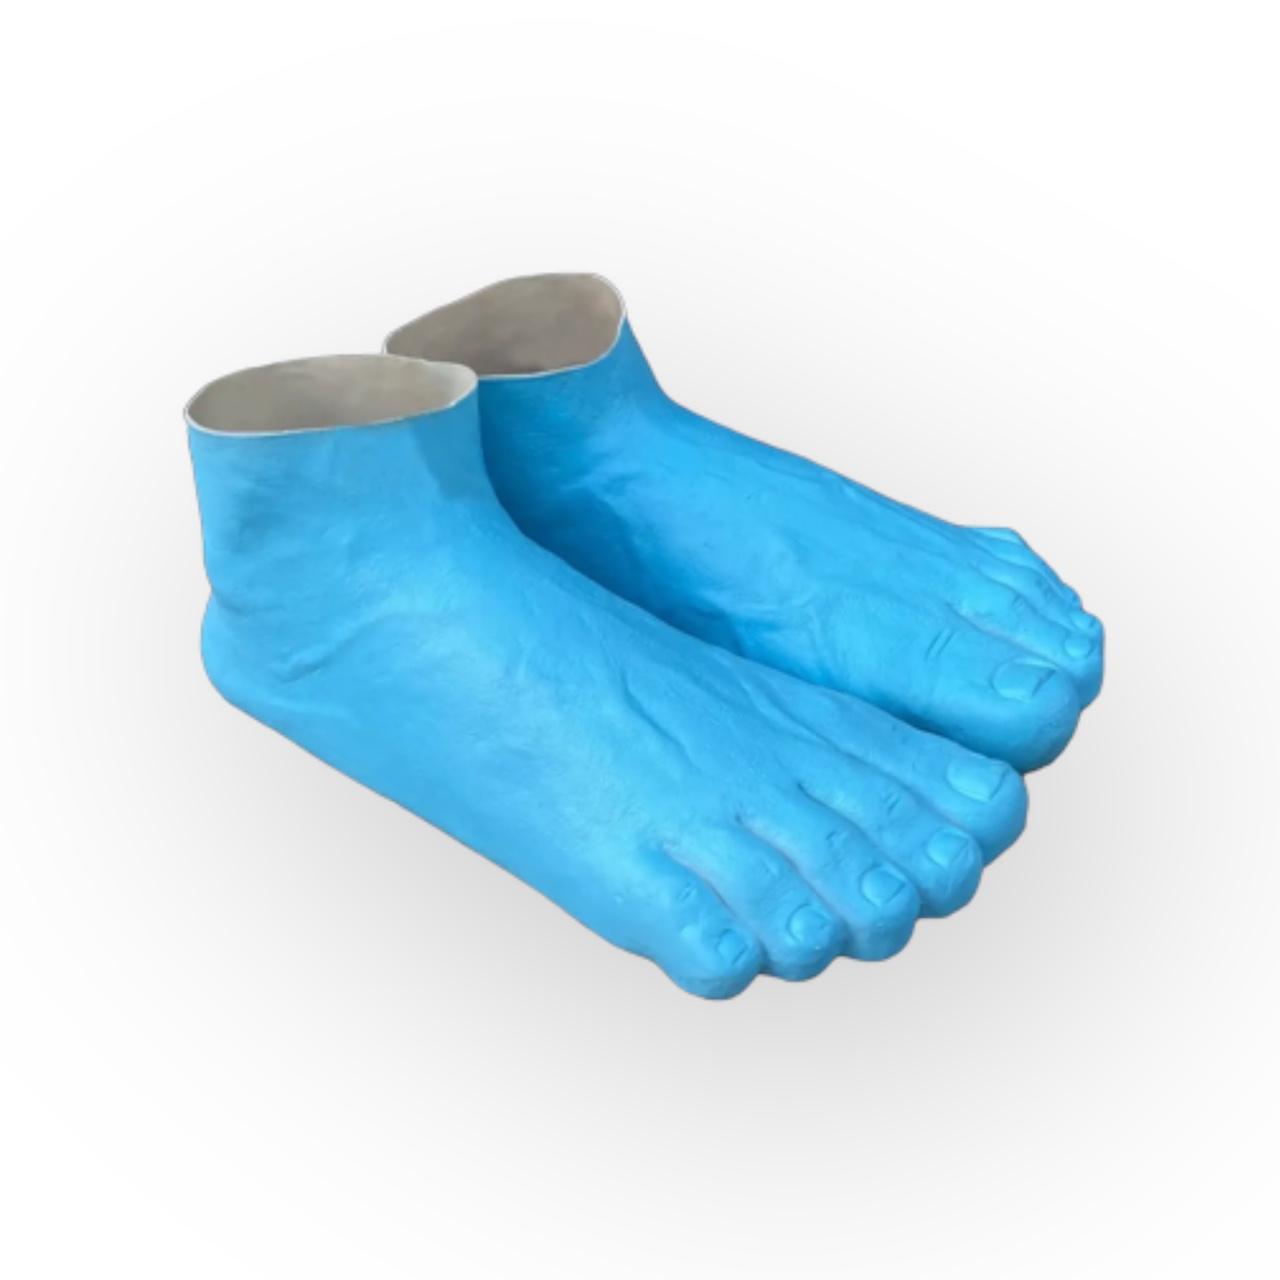 Imran Potato Imran Potato Caveman Slippers (Blue)